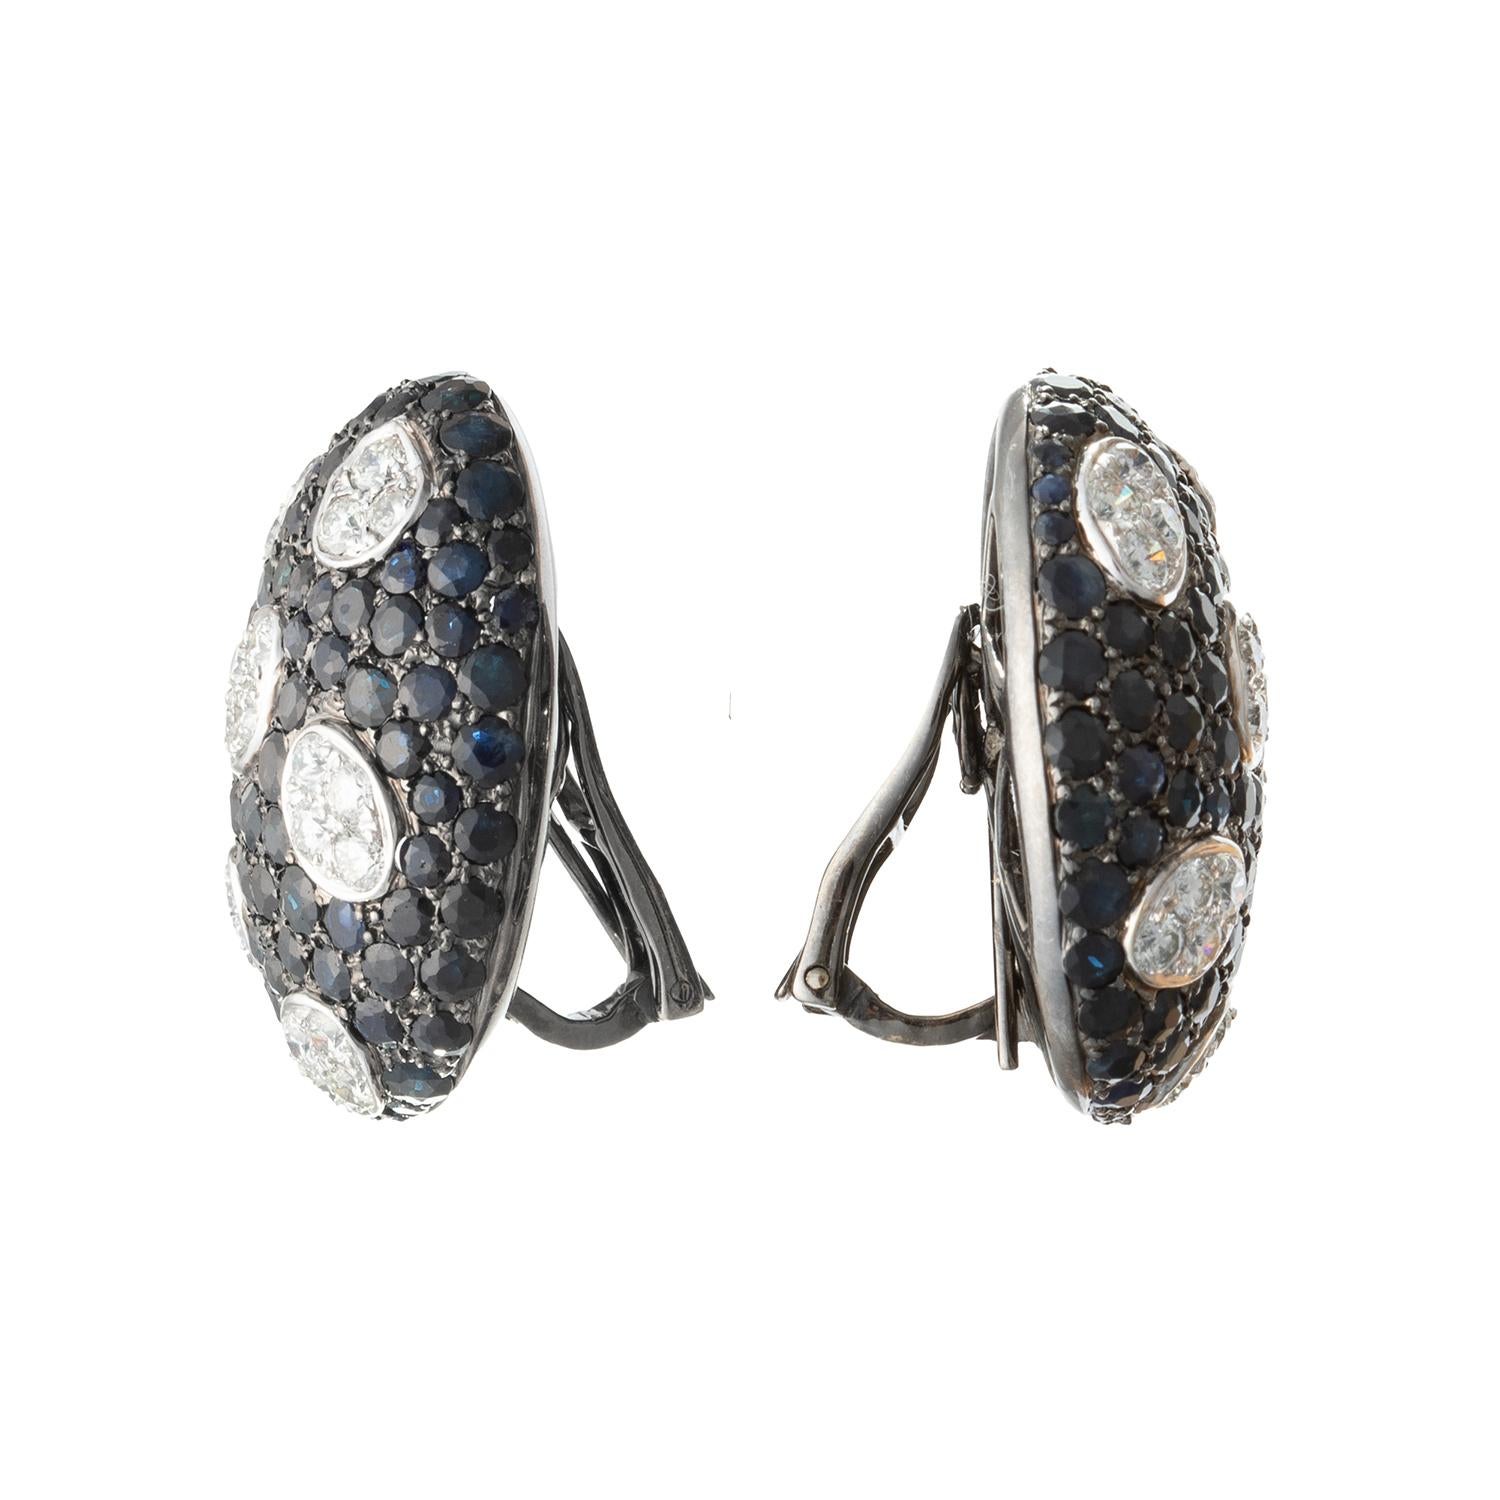 Brilliant Cut Pavé Sapphire Diamond Domed Polka Dot Earrings